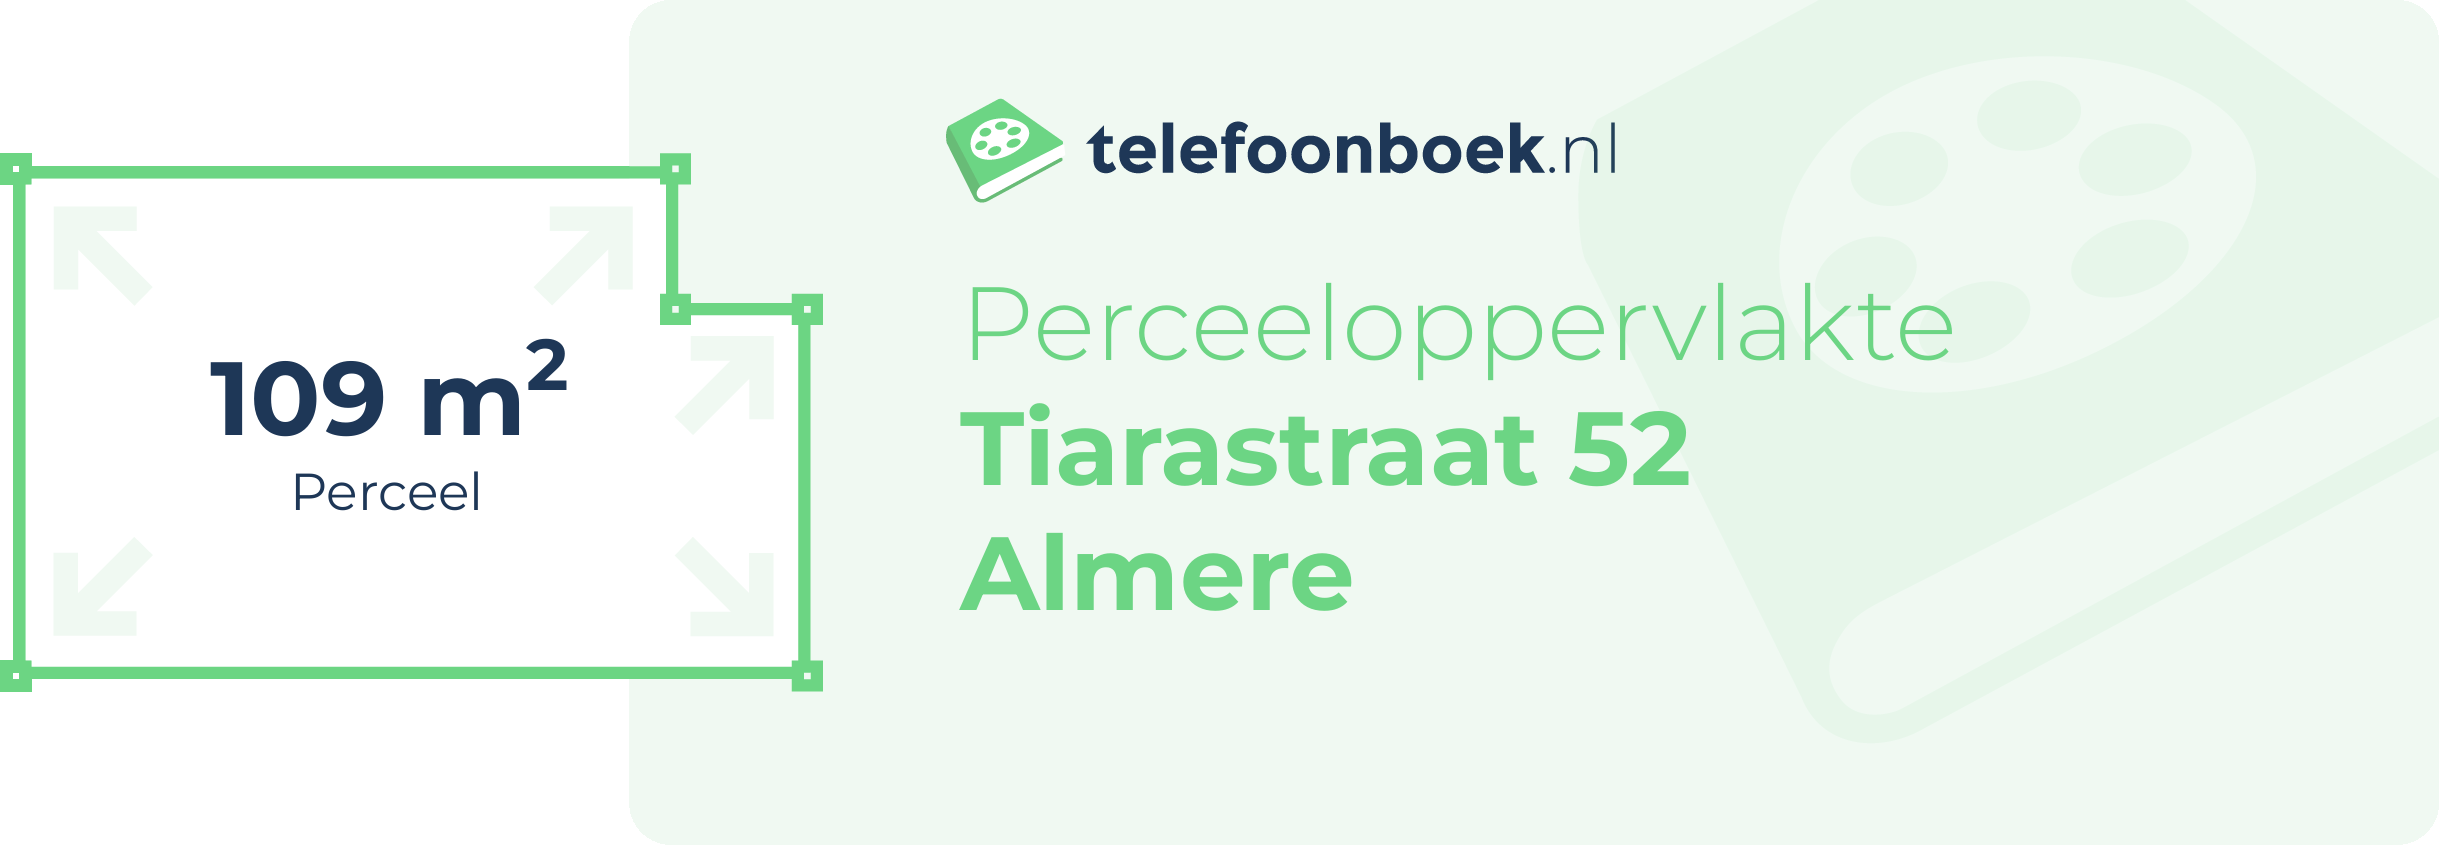 Perceeloppervlakte Tiarastraat 52 Almere